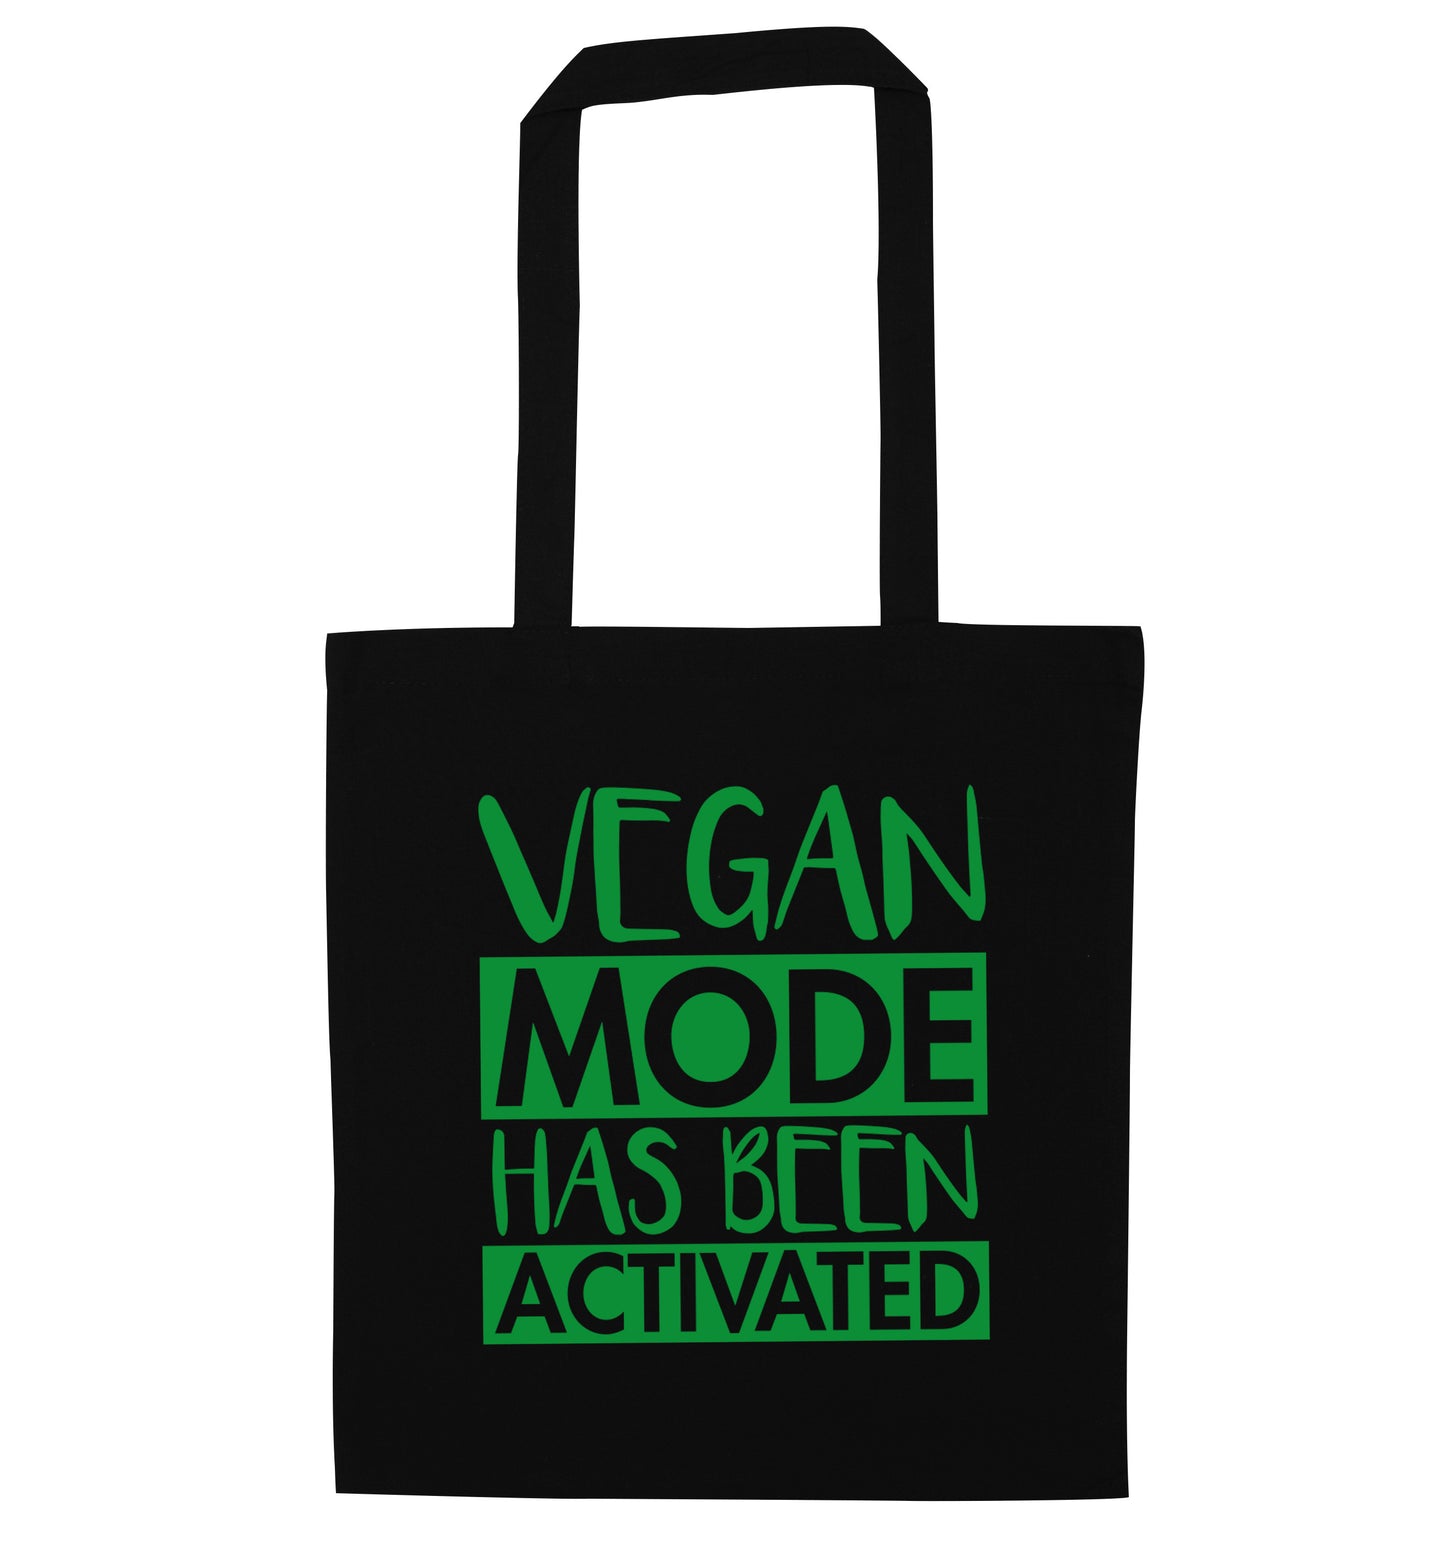 Vegan mode activated black tote bag